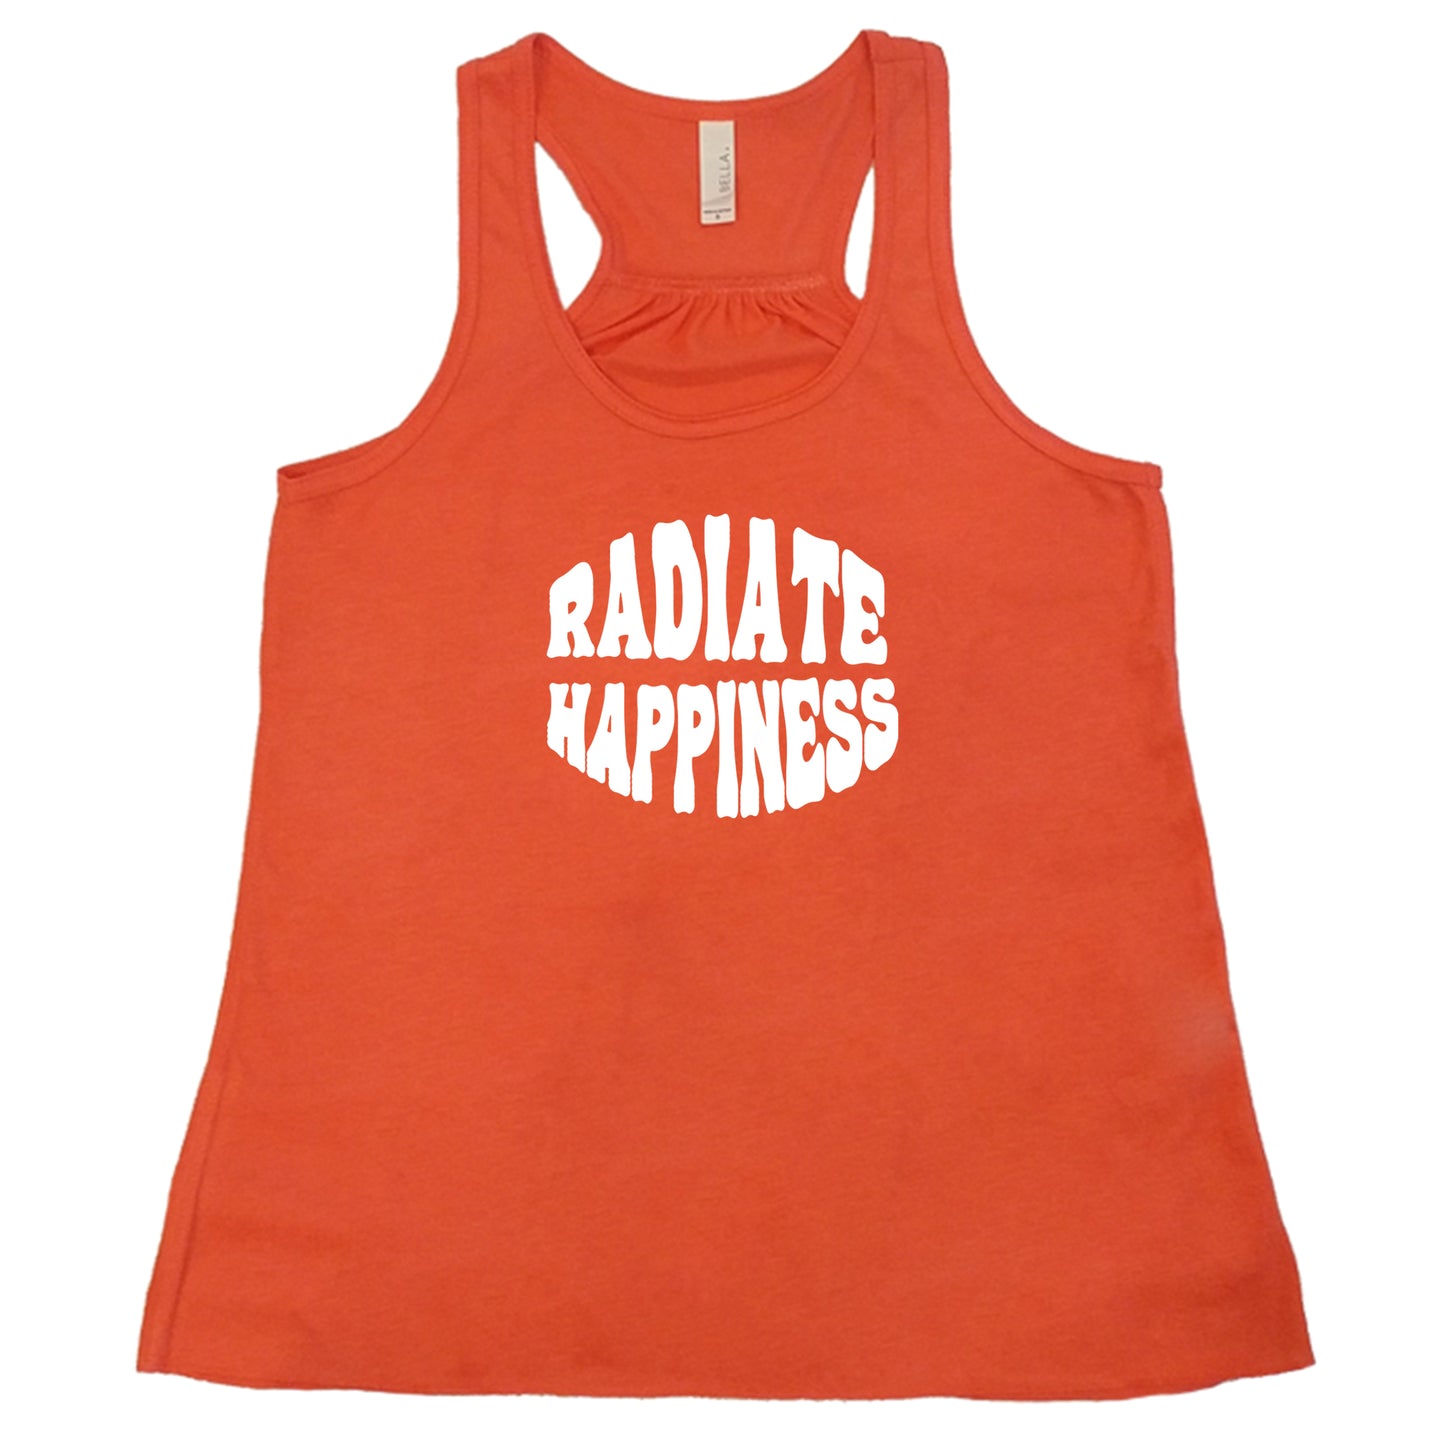 radiate happiness coral racerback shirt